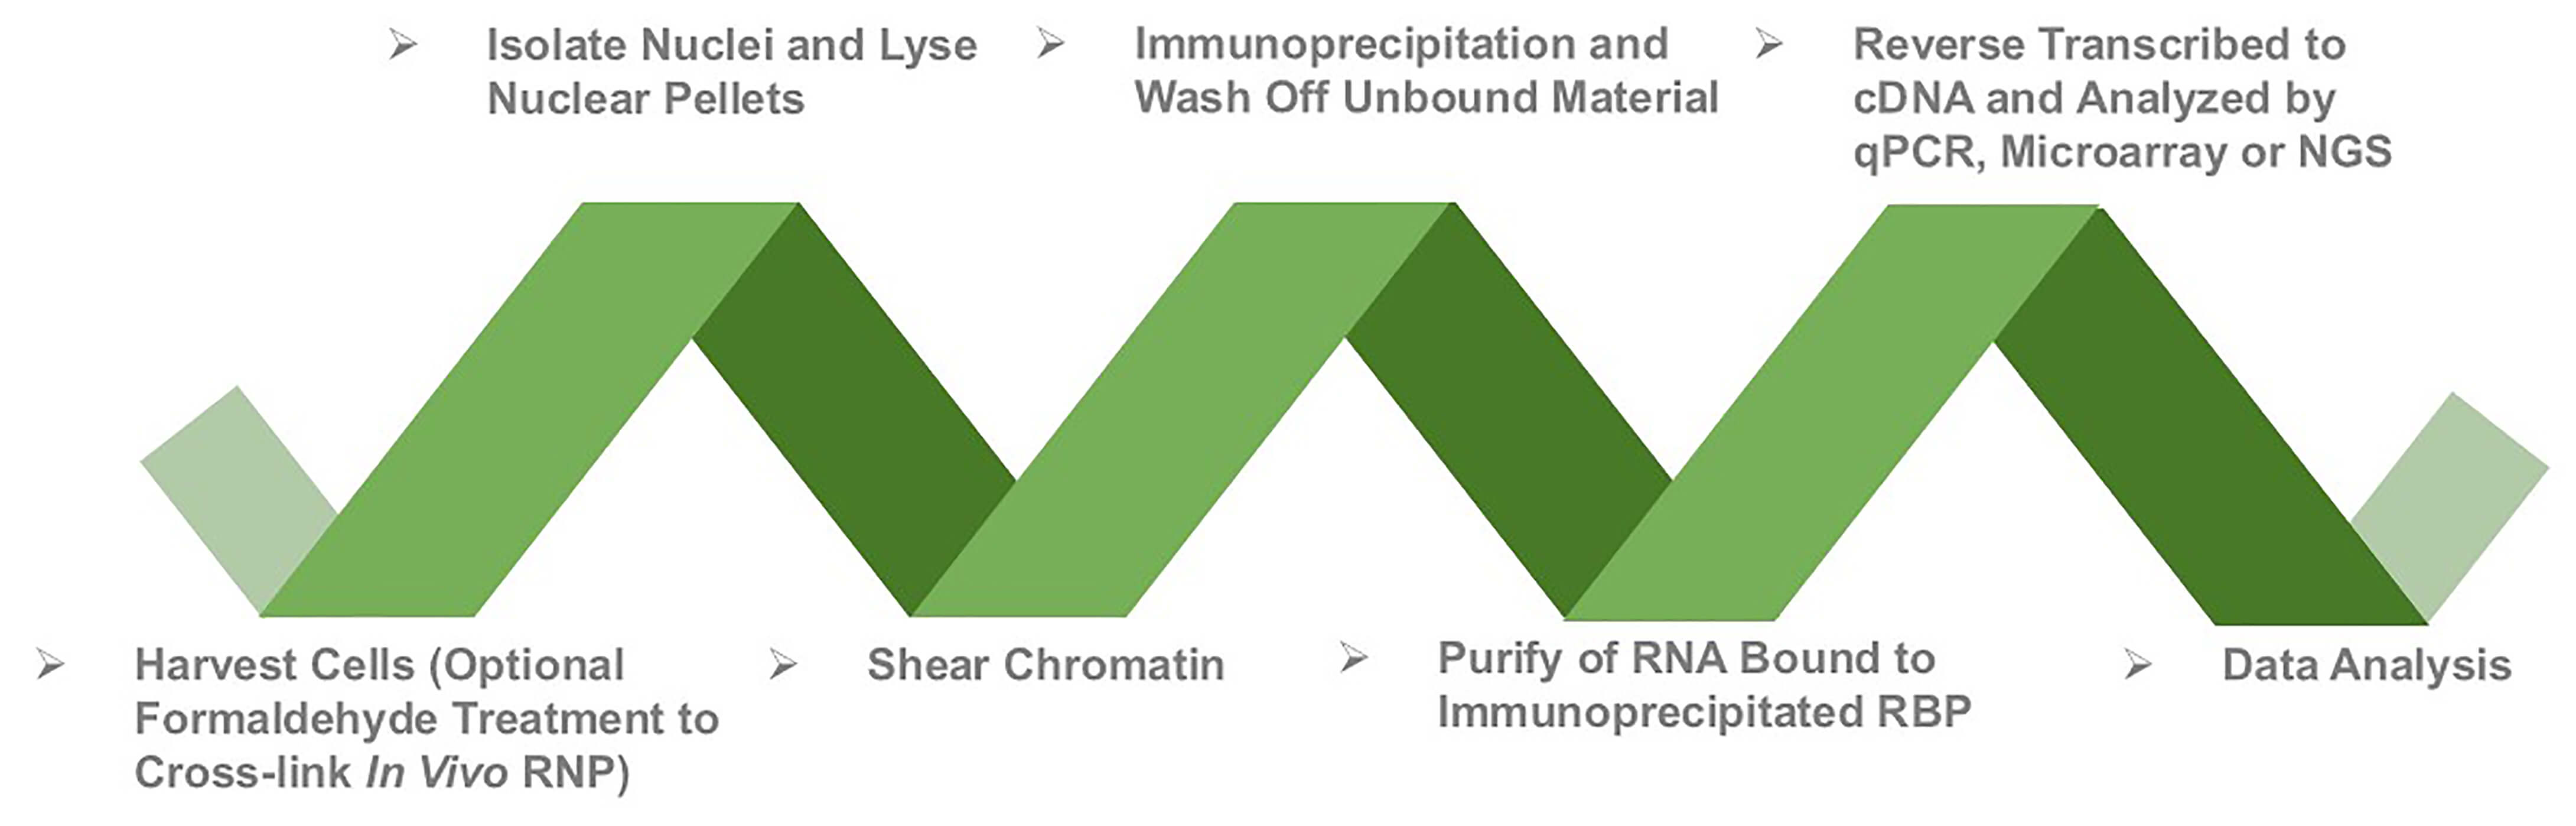 Workflow of RNA immunoprecipitation (RIP) services at Creative BioMart